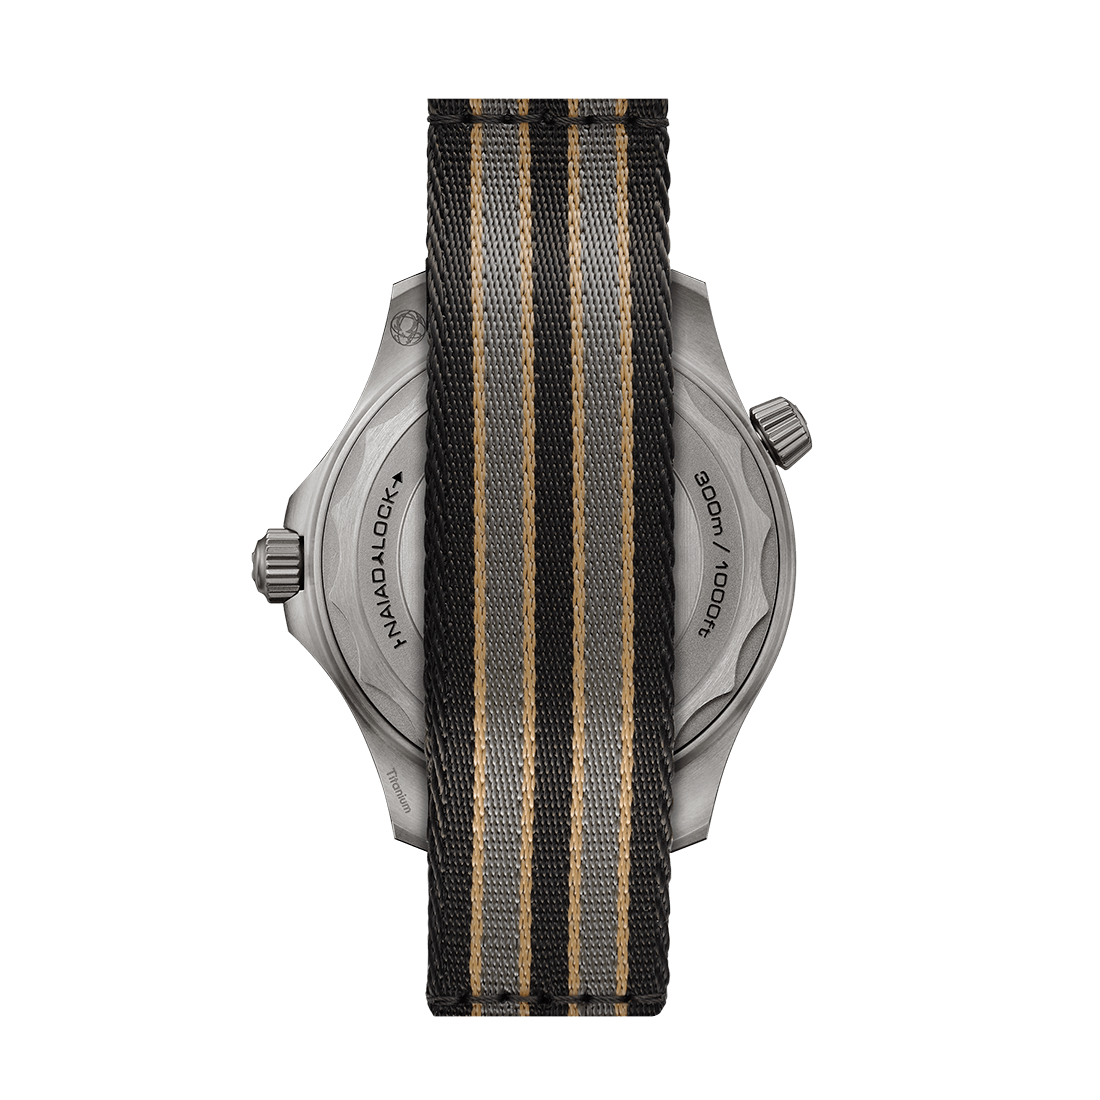 OMEGA Seamaster Diver 300M Master Chronometer 007 Edition, model #210.92.42.20.01.001, at IJL Since 1937